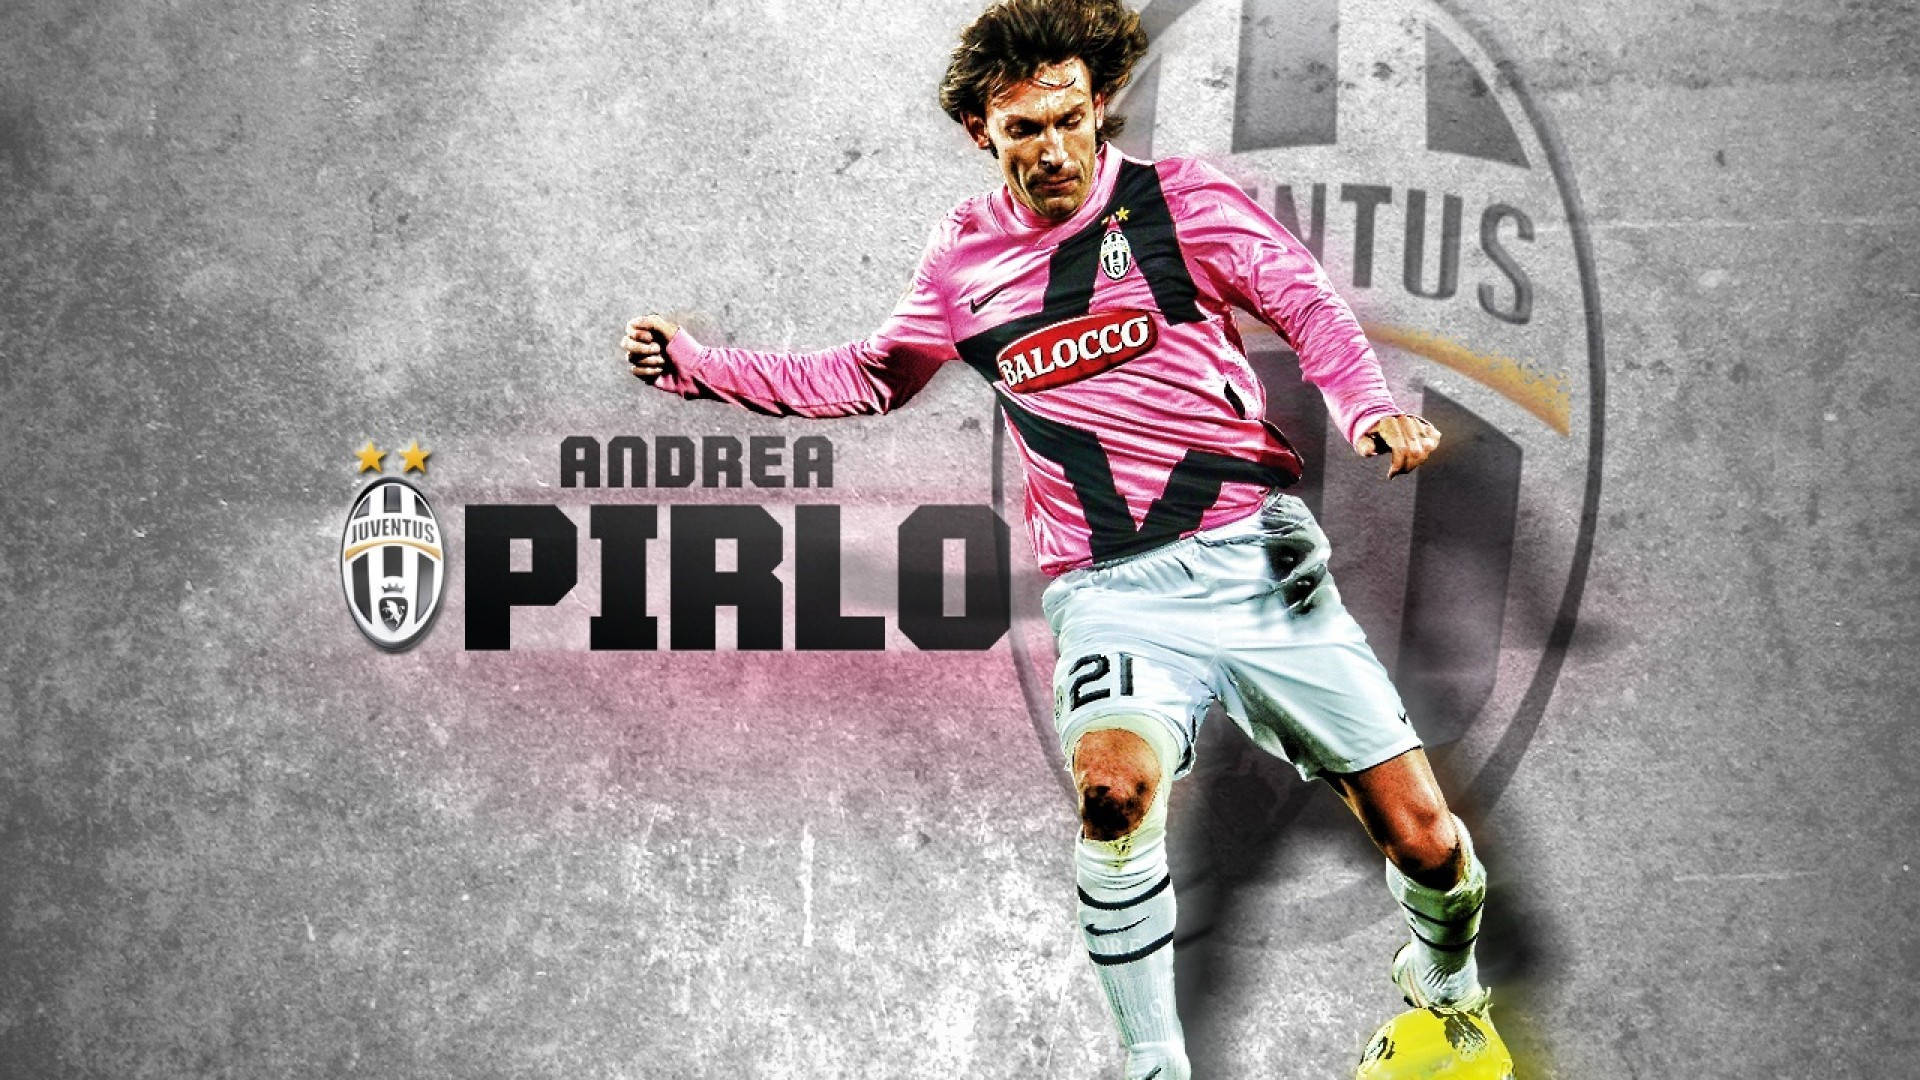 Andreapirlo Balocco Juventus Trikot Wallpaper